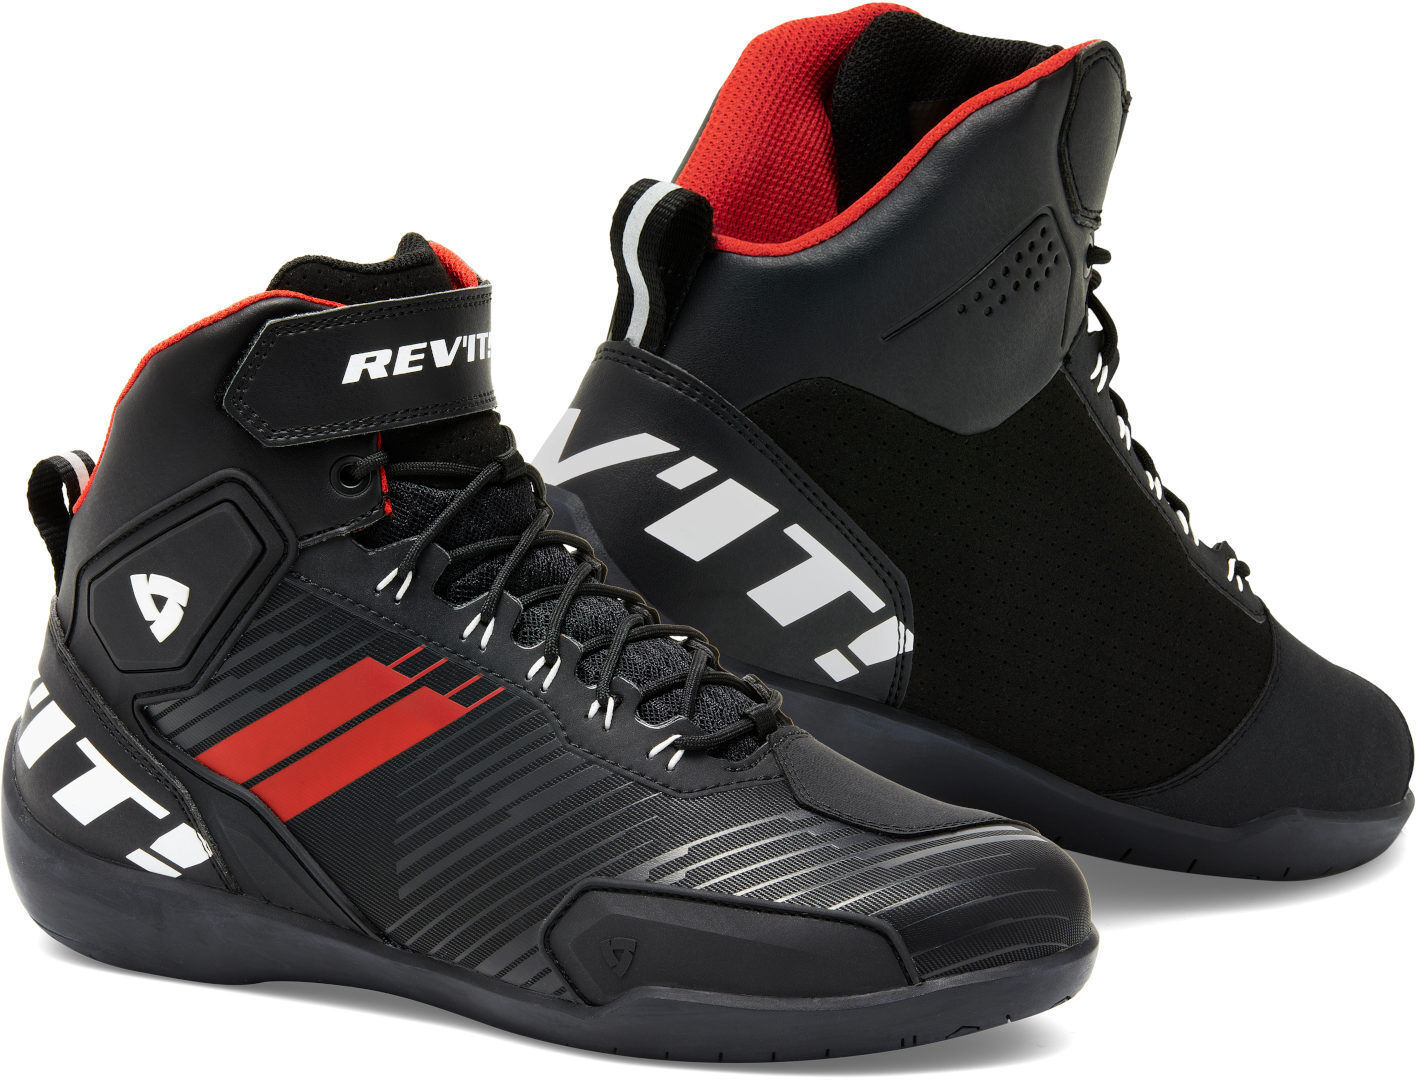 Revit G-Force Zapatos de motocicleta - Negro Blanco Rojo (41)